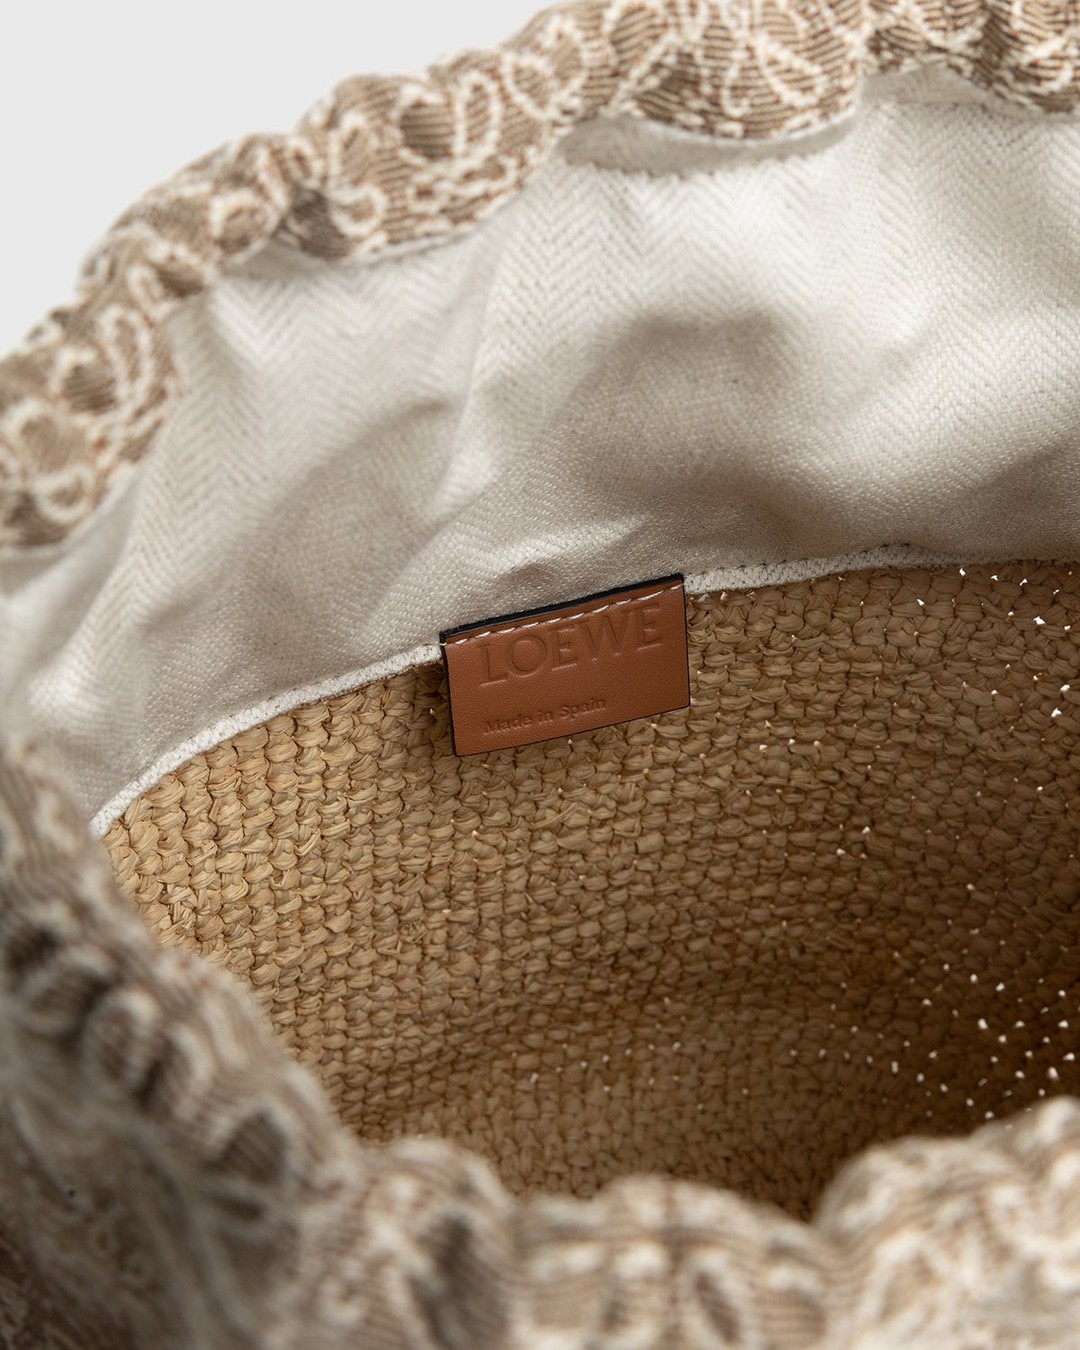 Loewe – Paula's Ibiza Pochette Anagram Basket Bag Natural/Tan - Shoulder Bags - Beige - Image 4